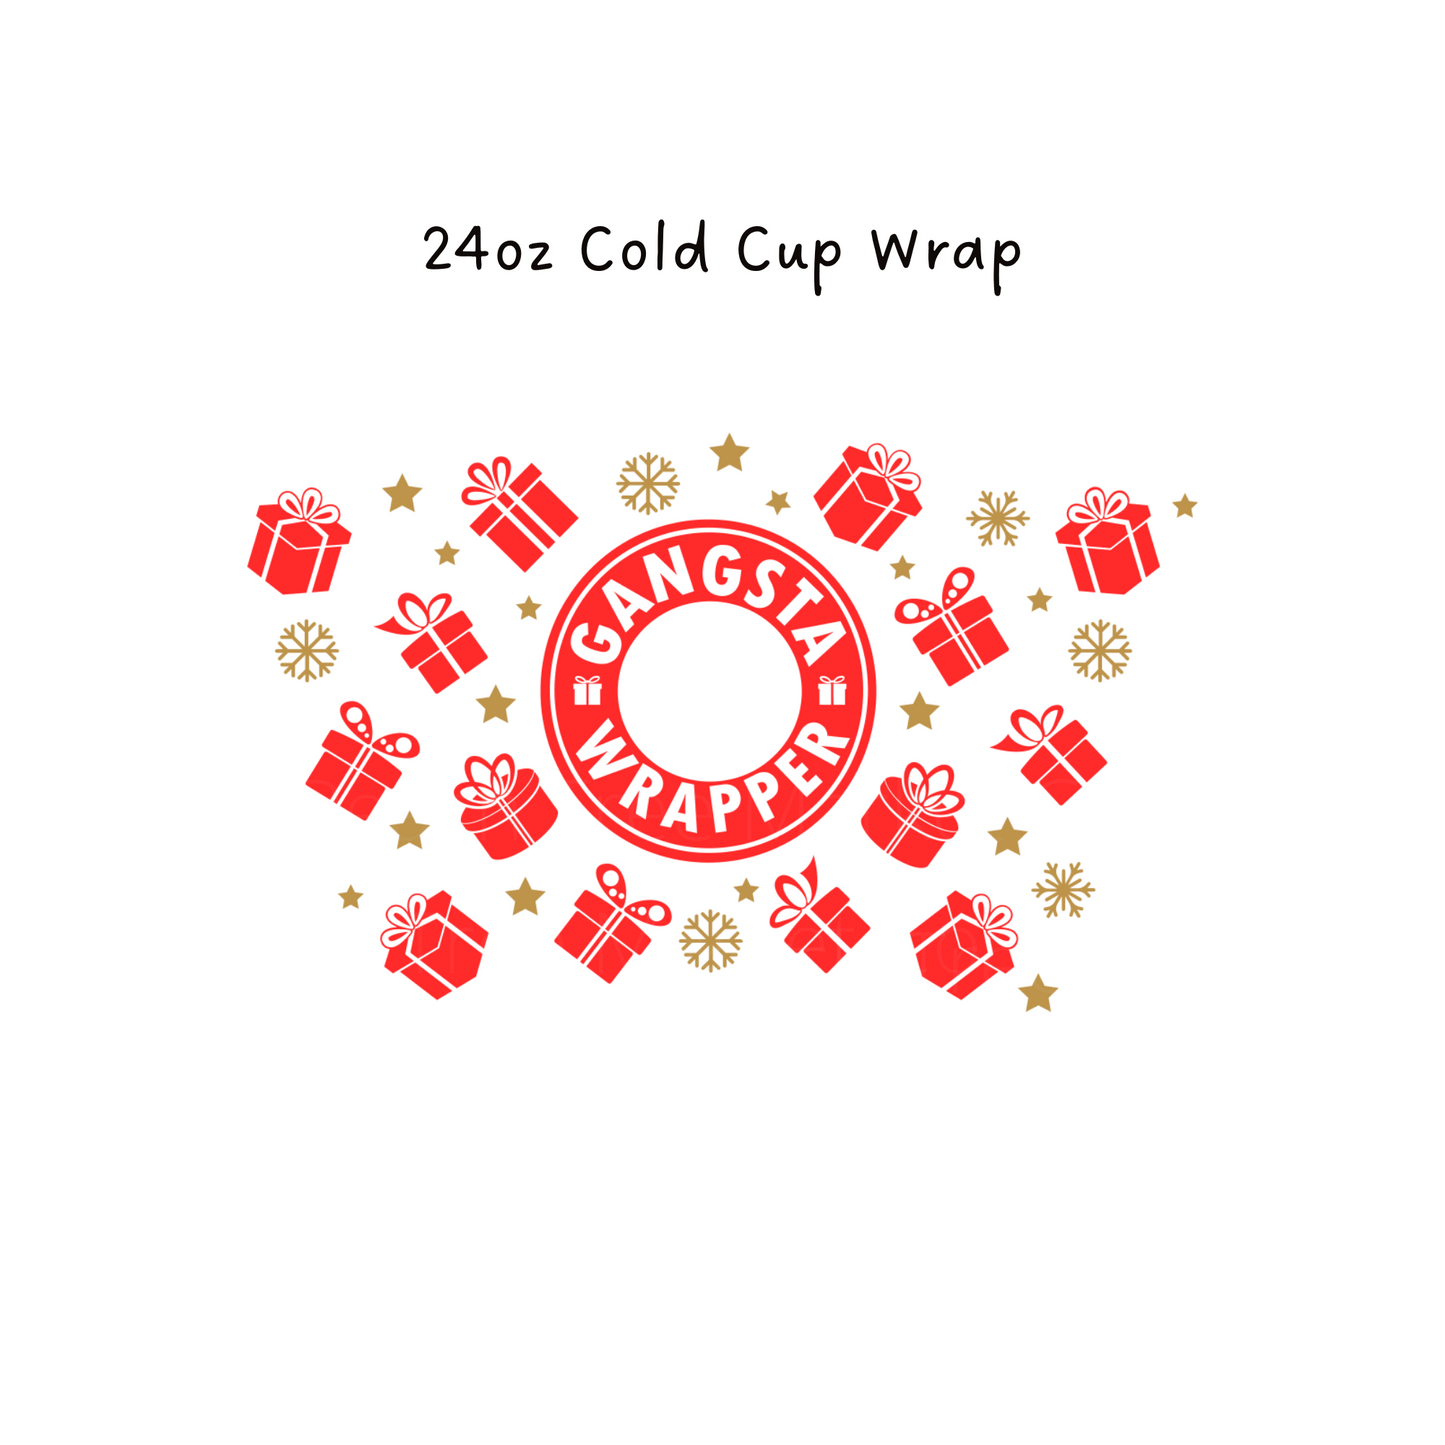 Gangsta Wrapper 24 OZ Cold Cup Wrap